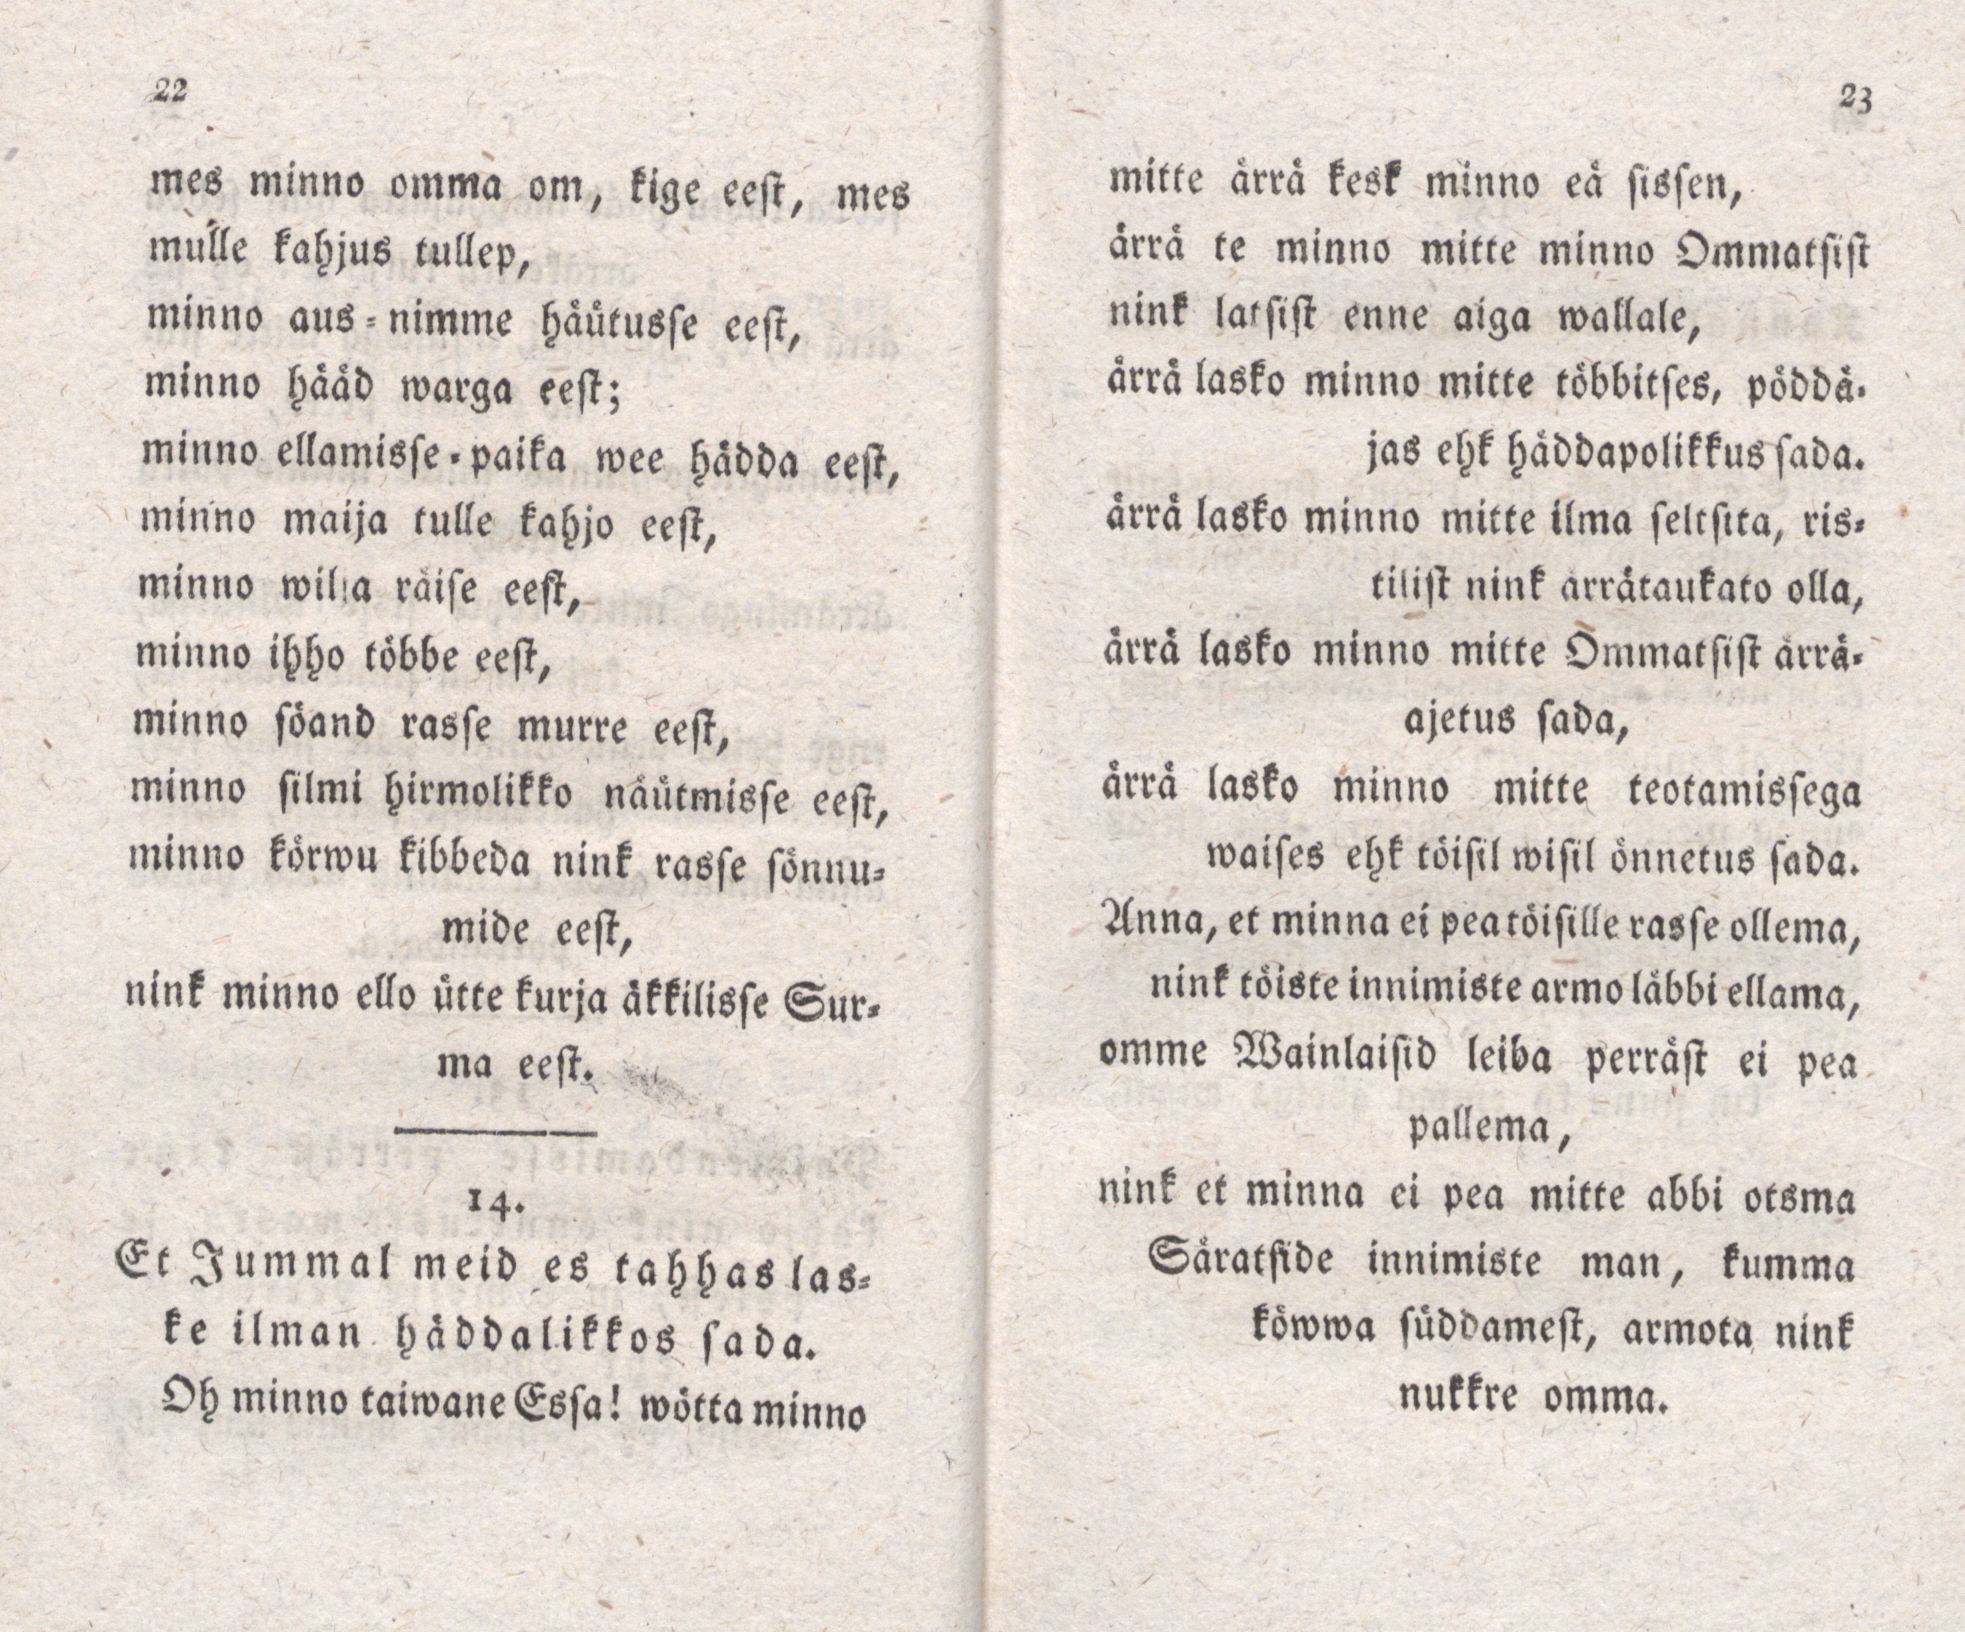 Kristlik nink söamelik Palwusse-Ramat Ma-Ristiinnimissille tarbis (1820) | 12. (22-23) Main body of text